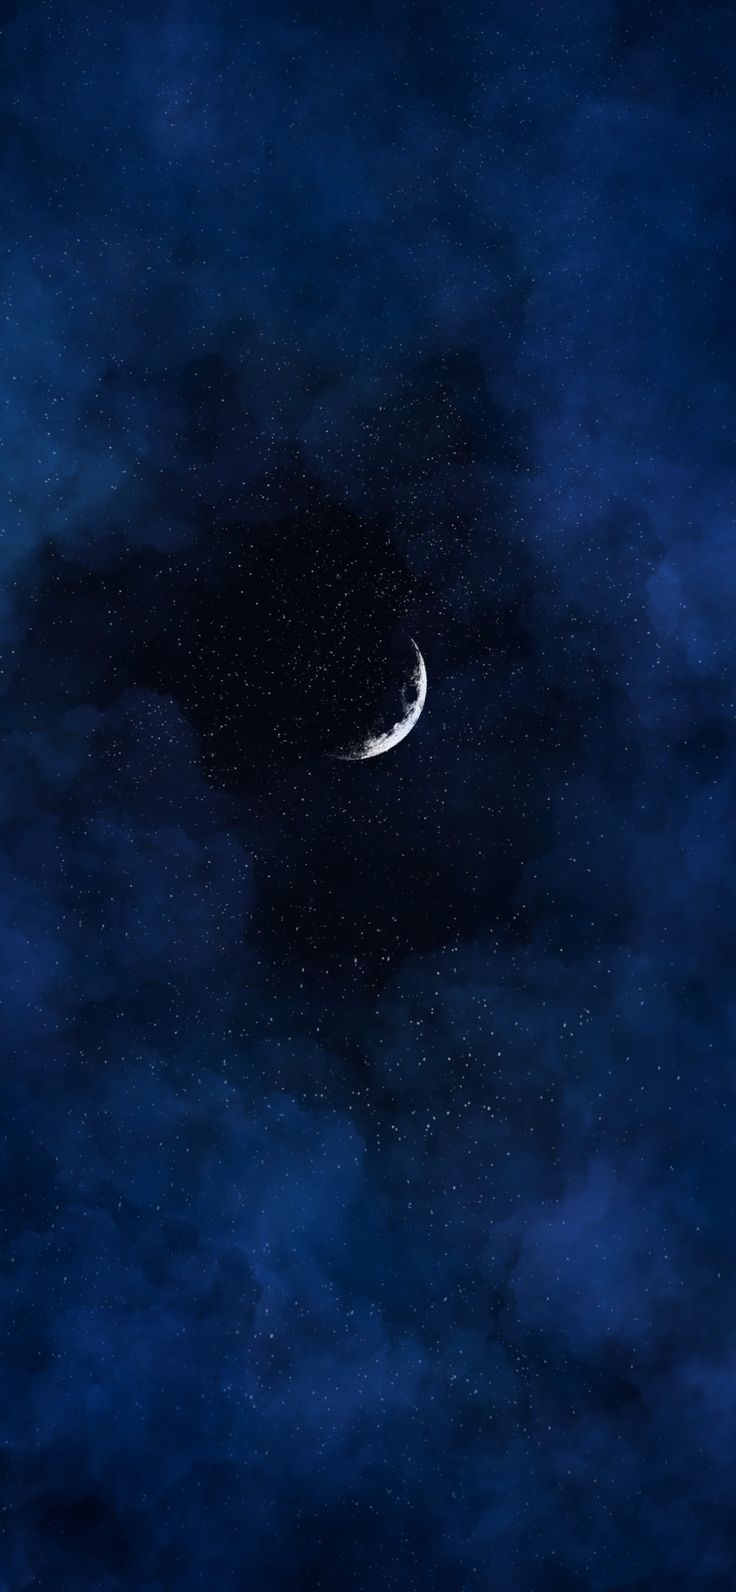 Blue Moon iPhone Wallpaper In Retro